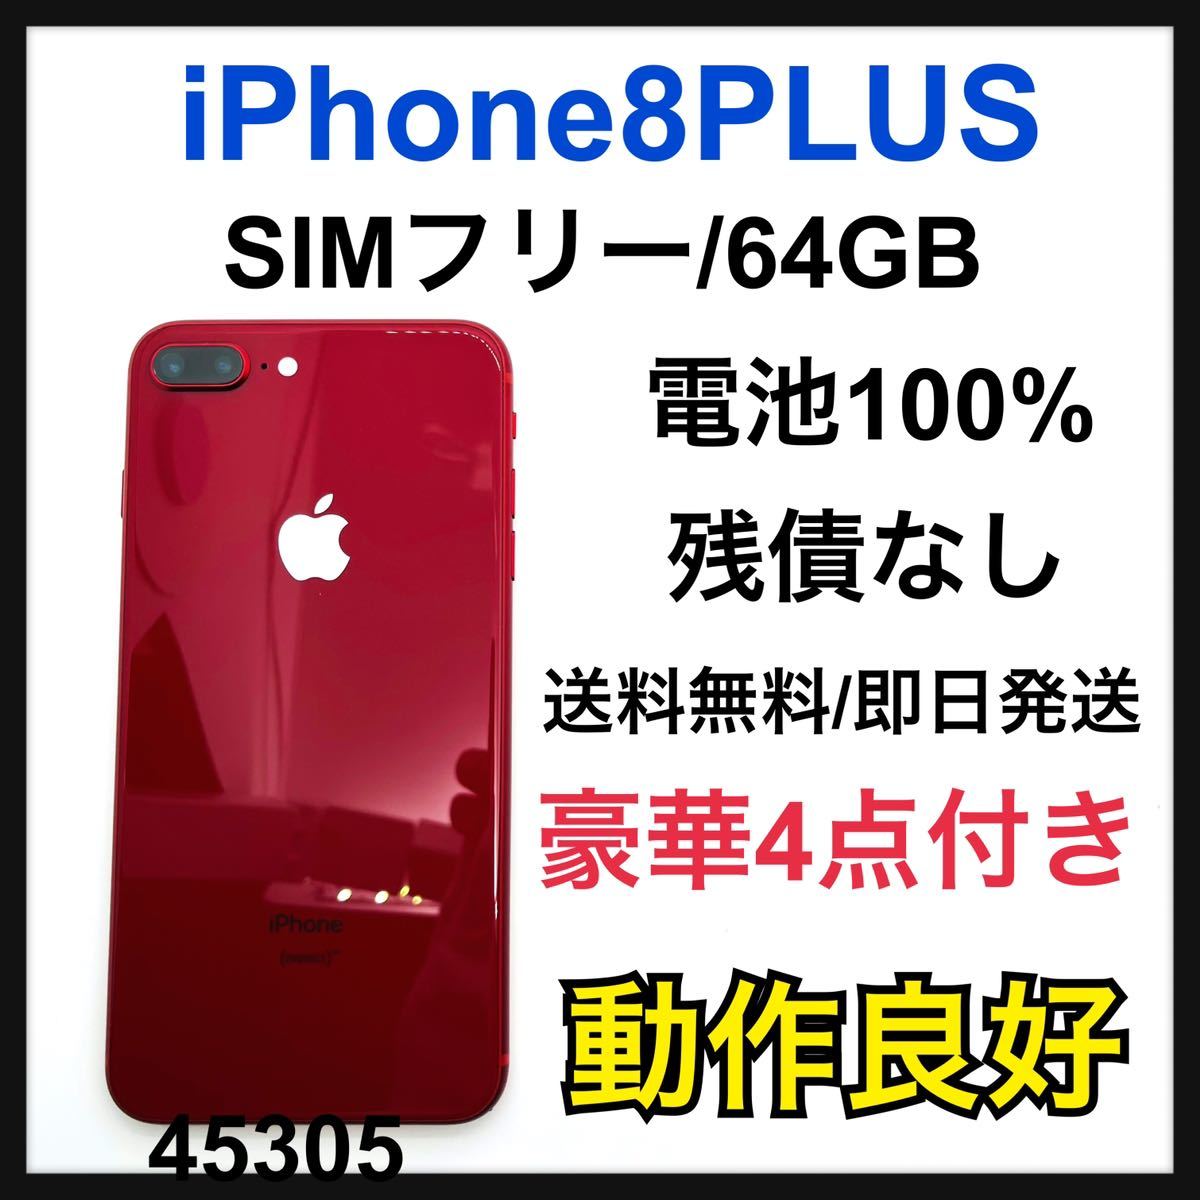 iPhone8 red 64GB simフリー-connectedremag.com